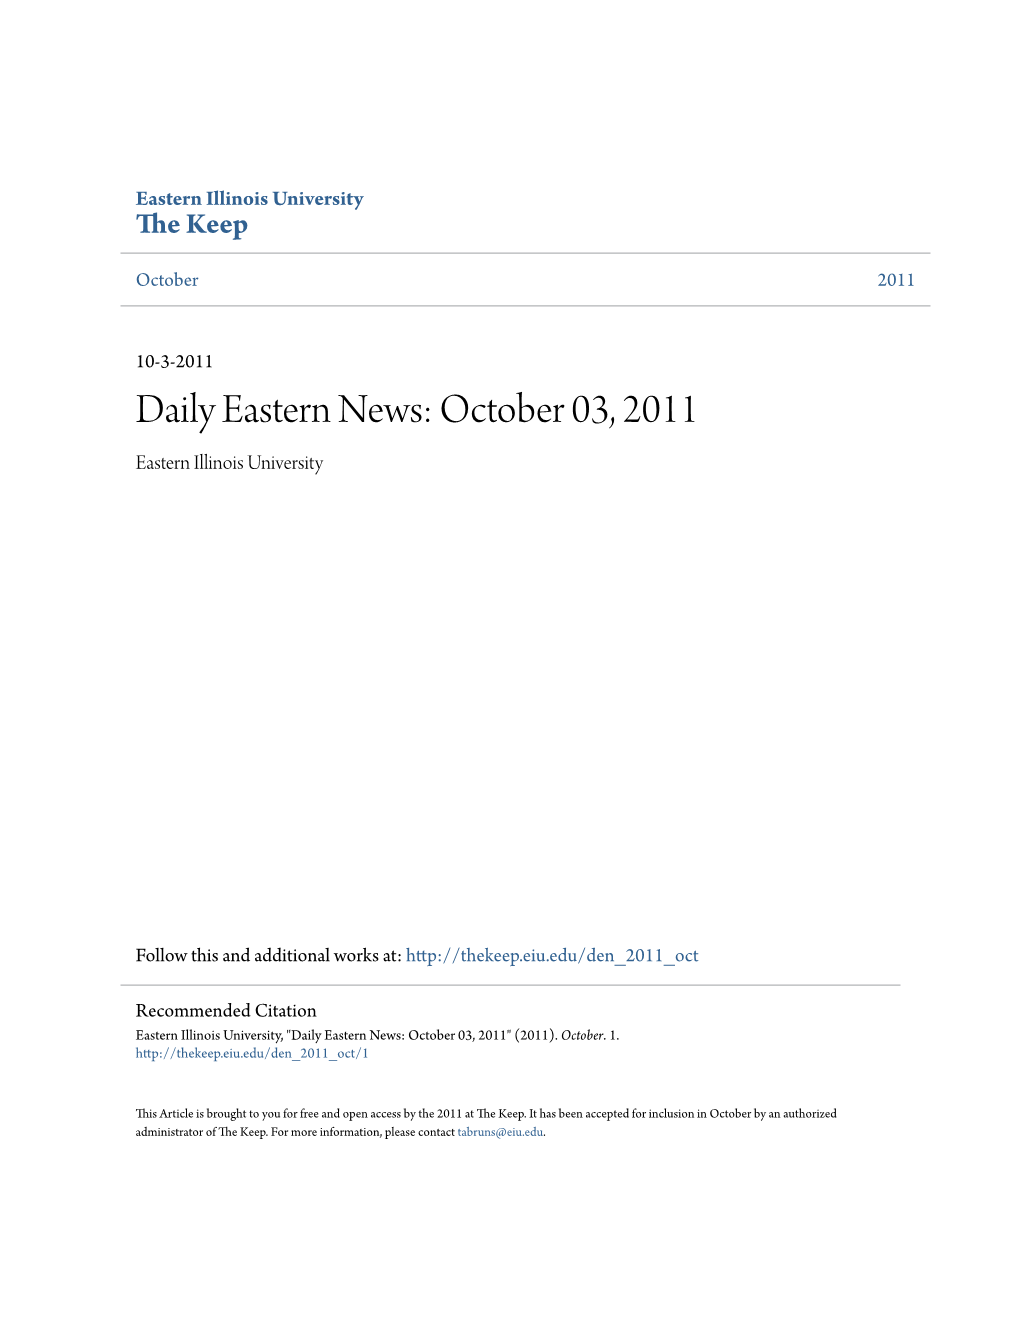 Eastern News: October 03, 2011 Eastern Illinois University